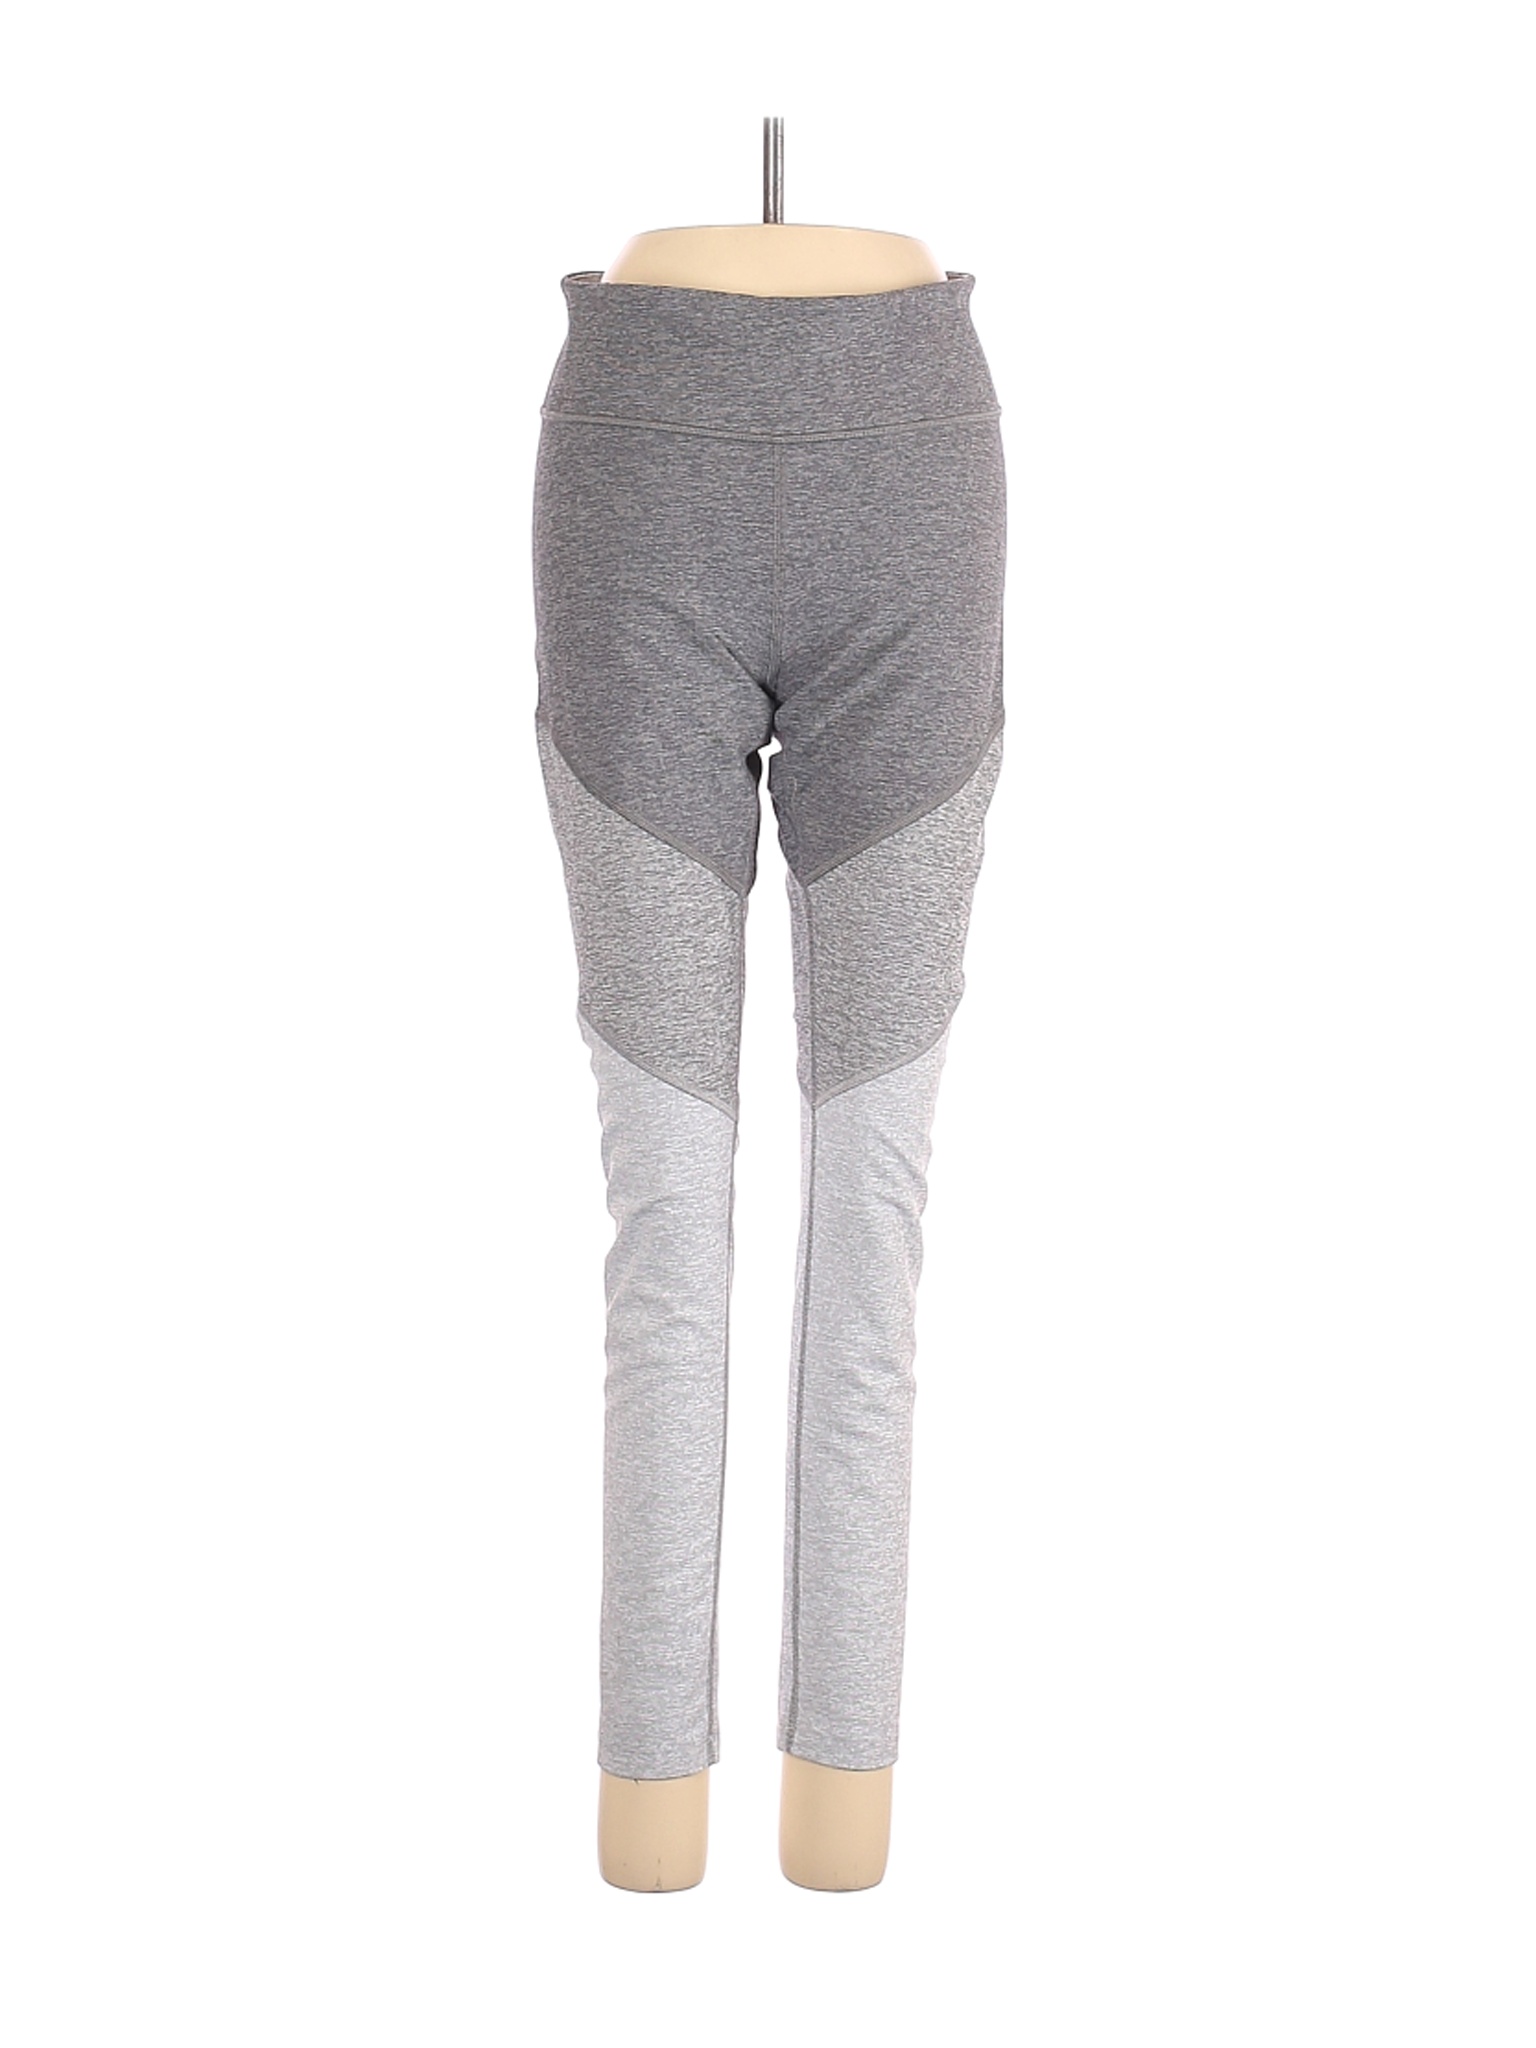 Outdoor Voices Women Gray Active Pants S | eBay